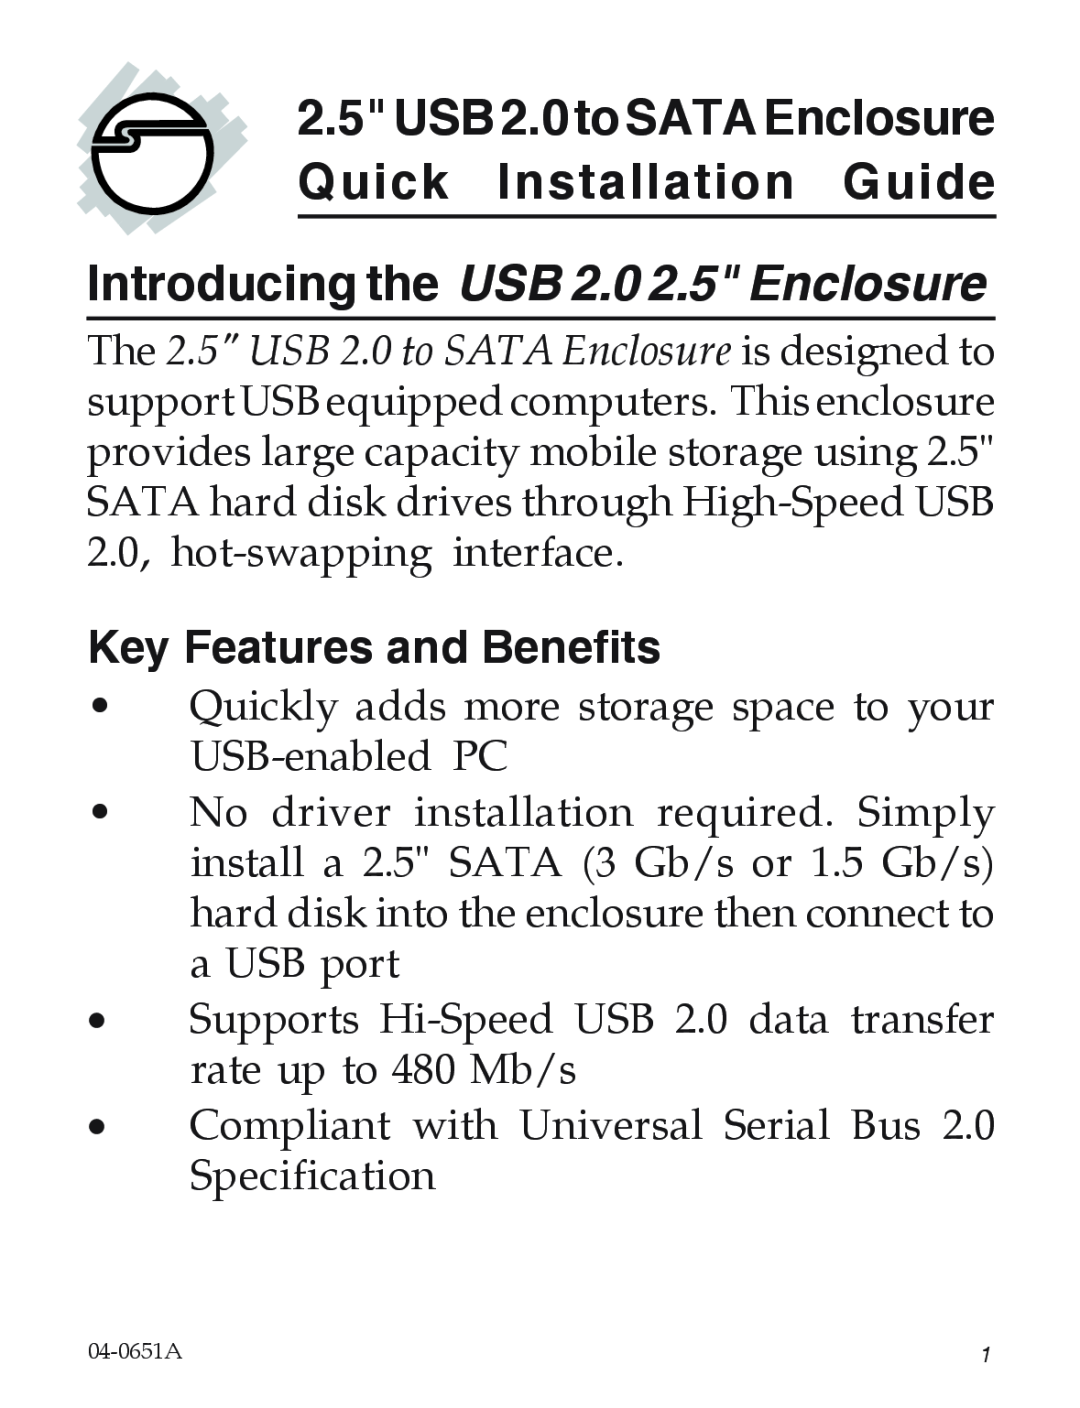 SIIG 5090S manual 2.5USB2.0toSATAEnclosure Quick Installation Guide, Introducing the USB 2.0 2.5 Enclosure 